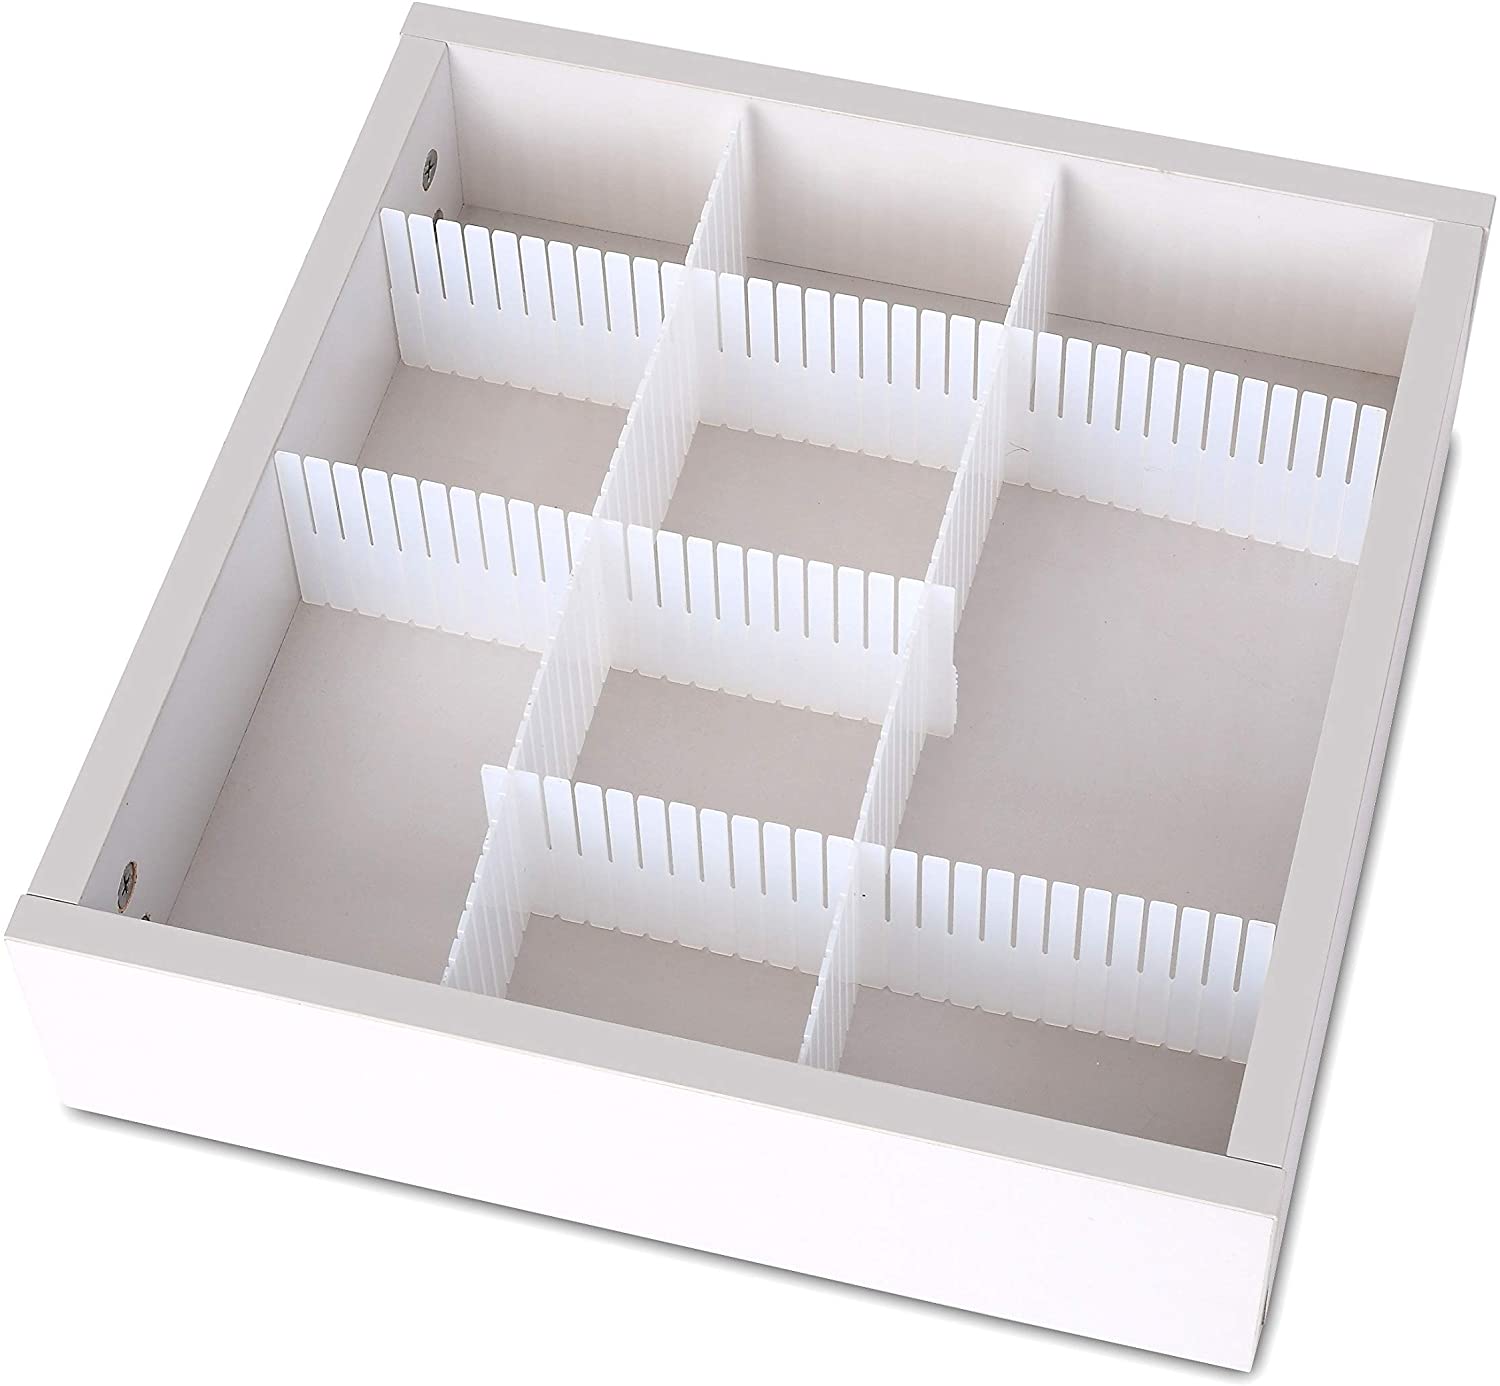 MISC Adjustable Grid Drawer Dividers 3 Pack 2178 White Plastic